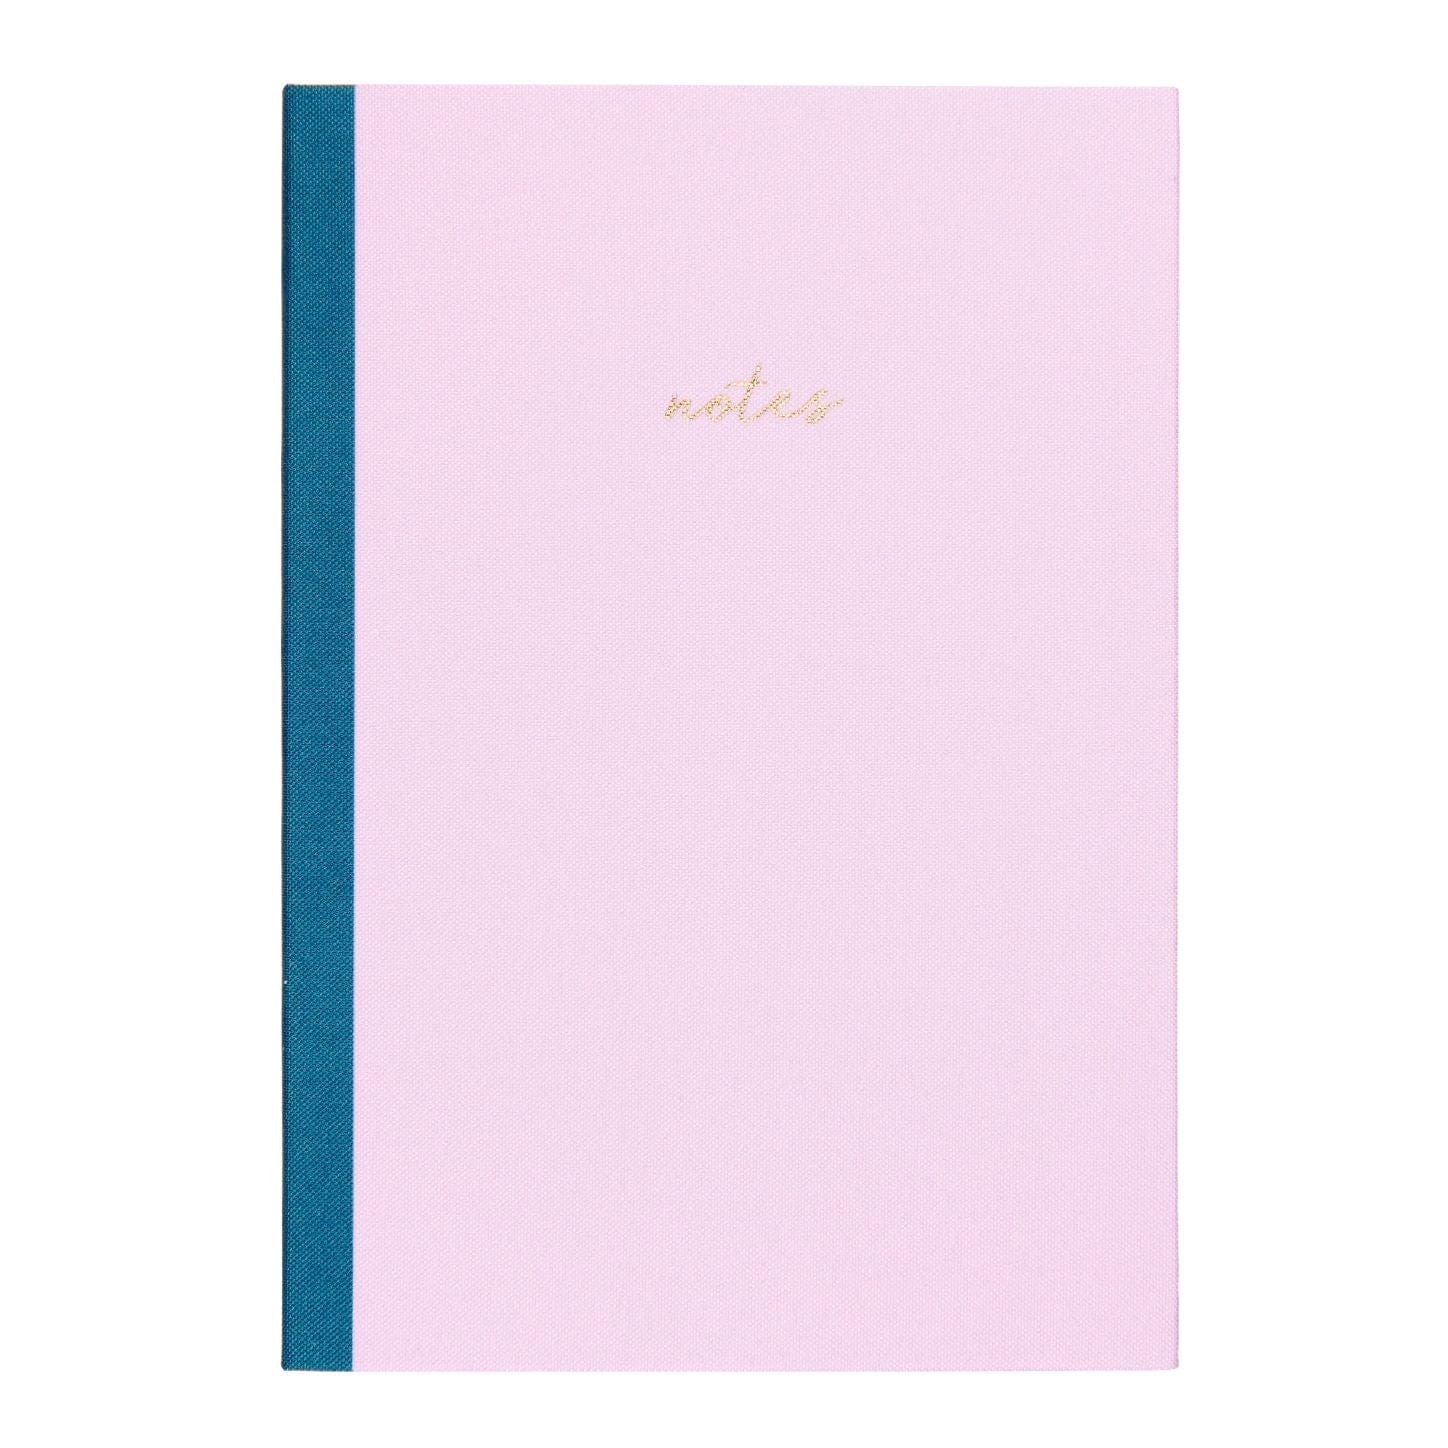 Pink Notes Journal Gartner Studios Notebooks 61036